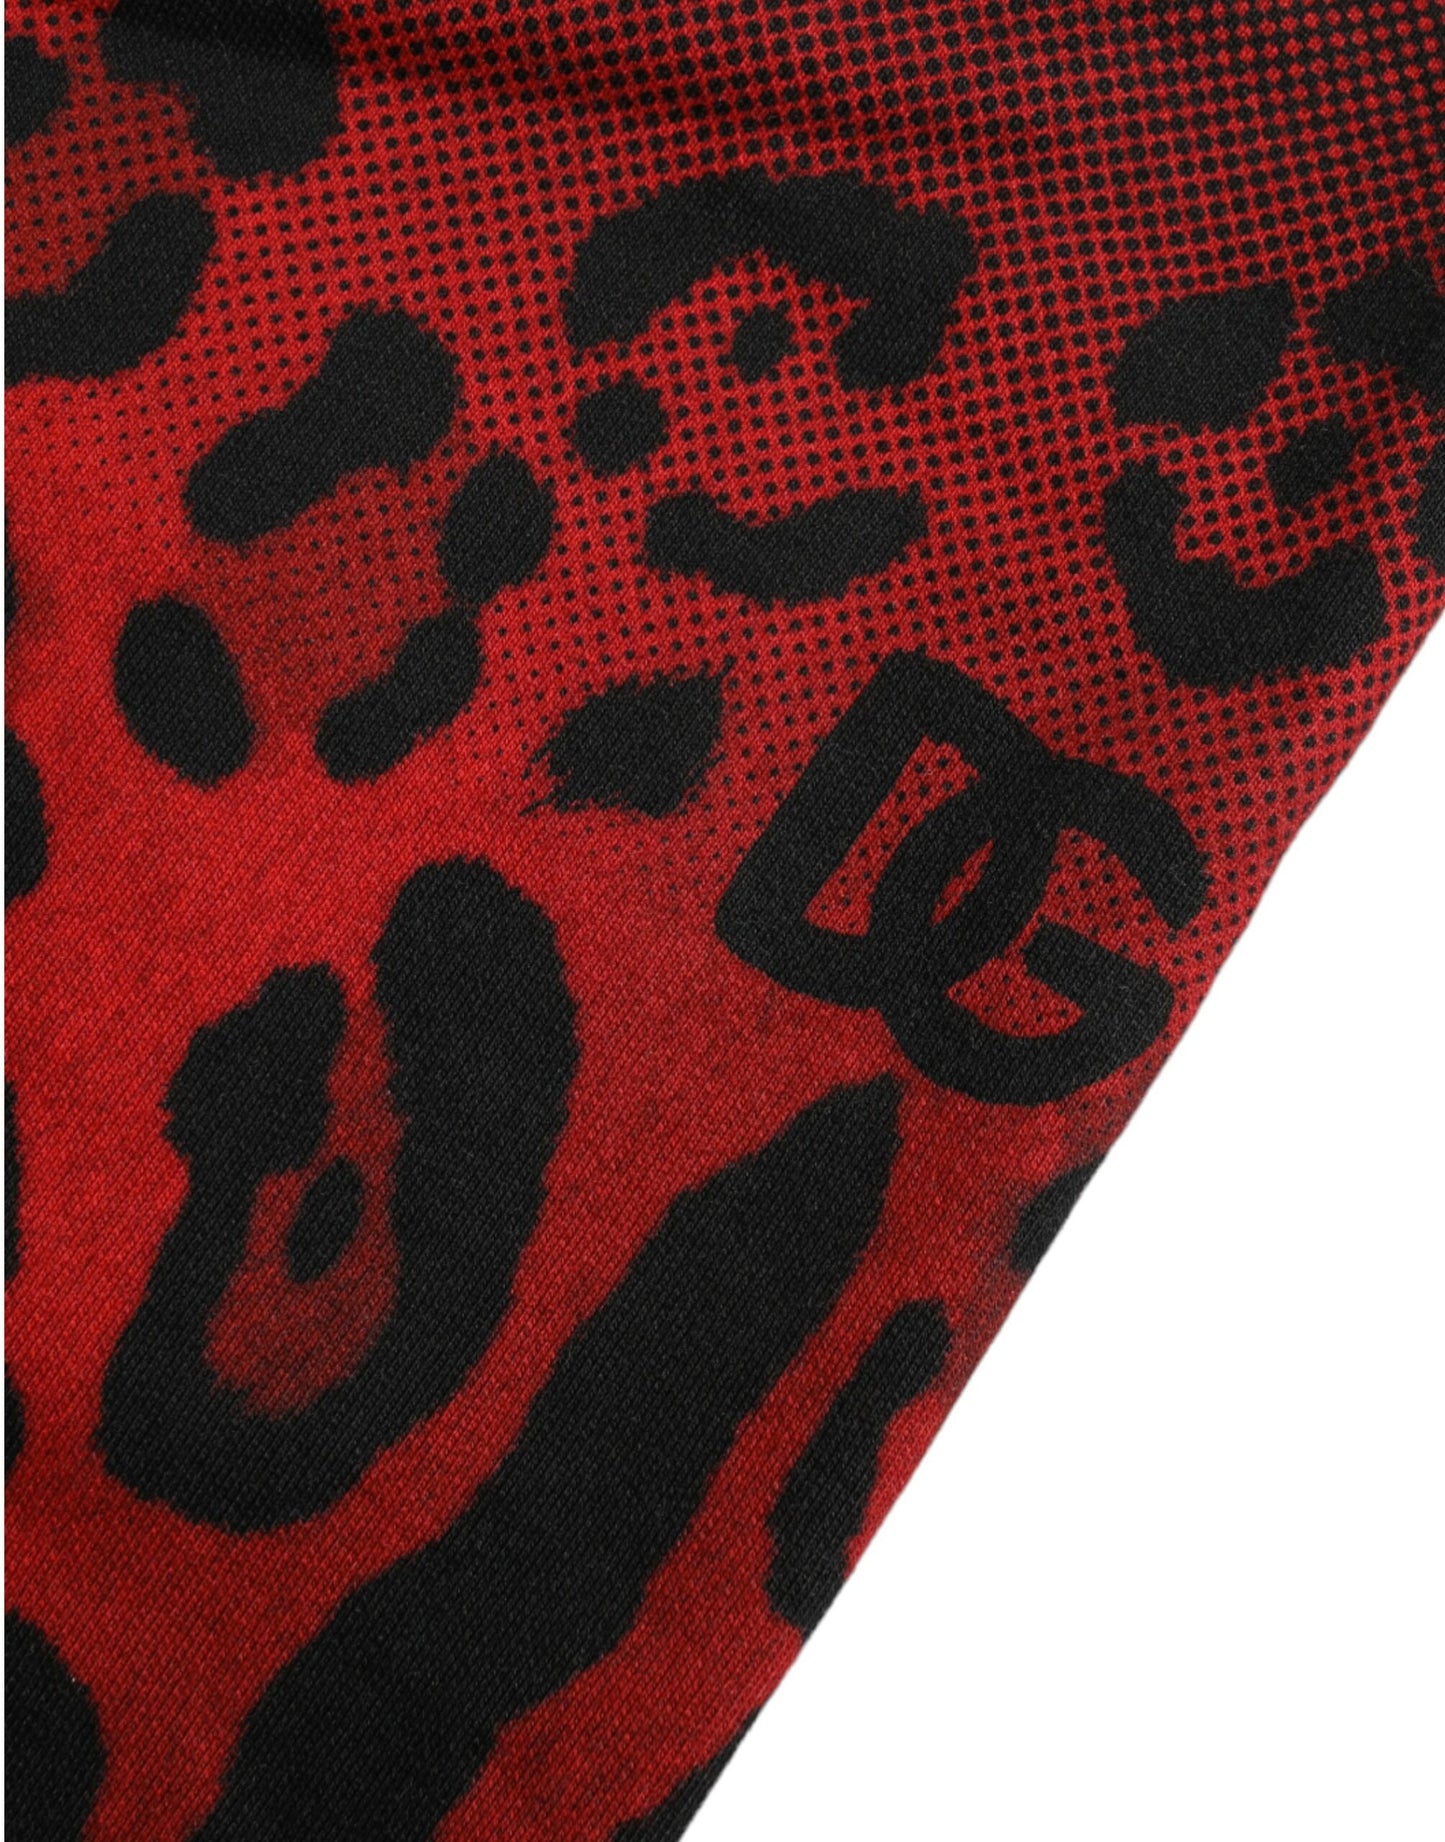 Red Leopard Print Cotton Bermuda Shorts